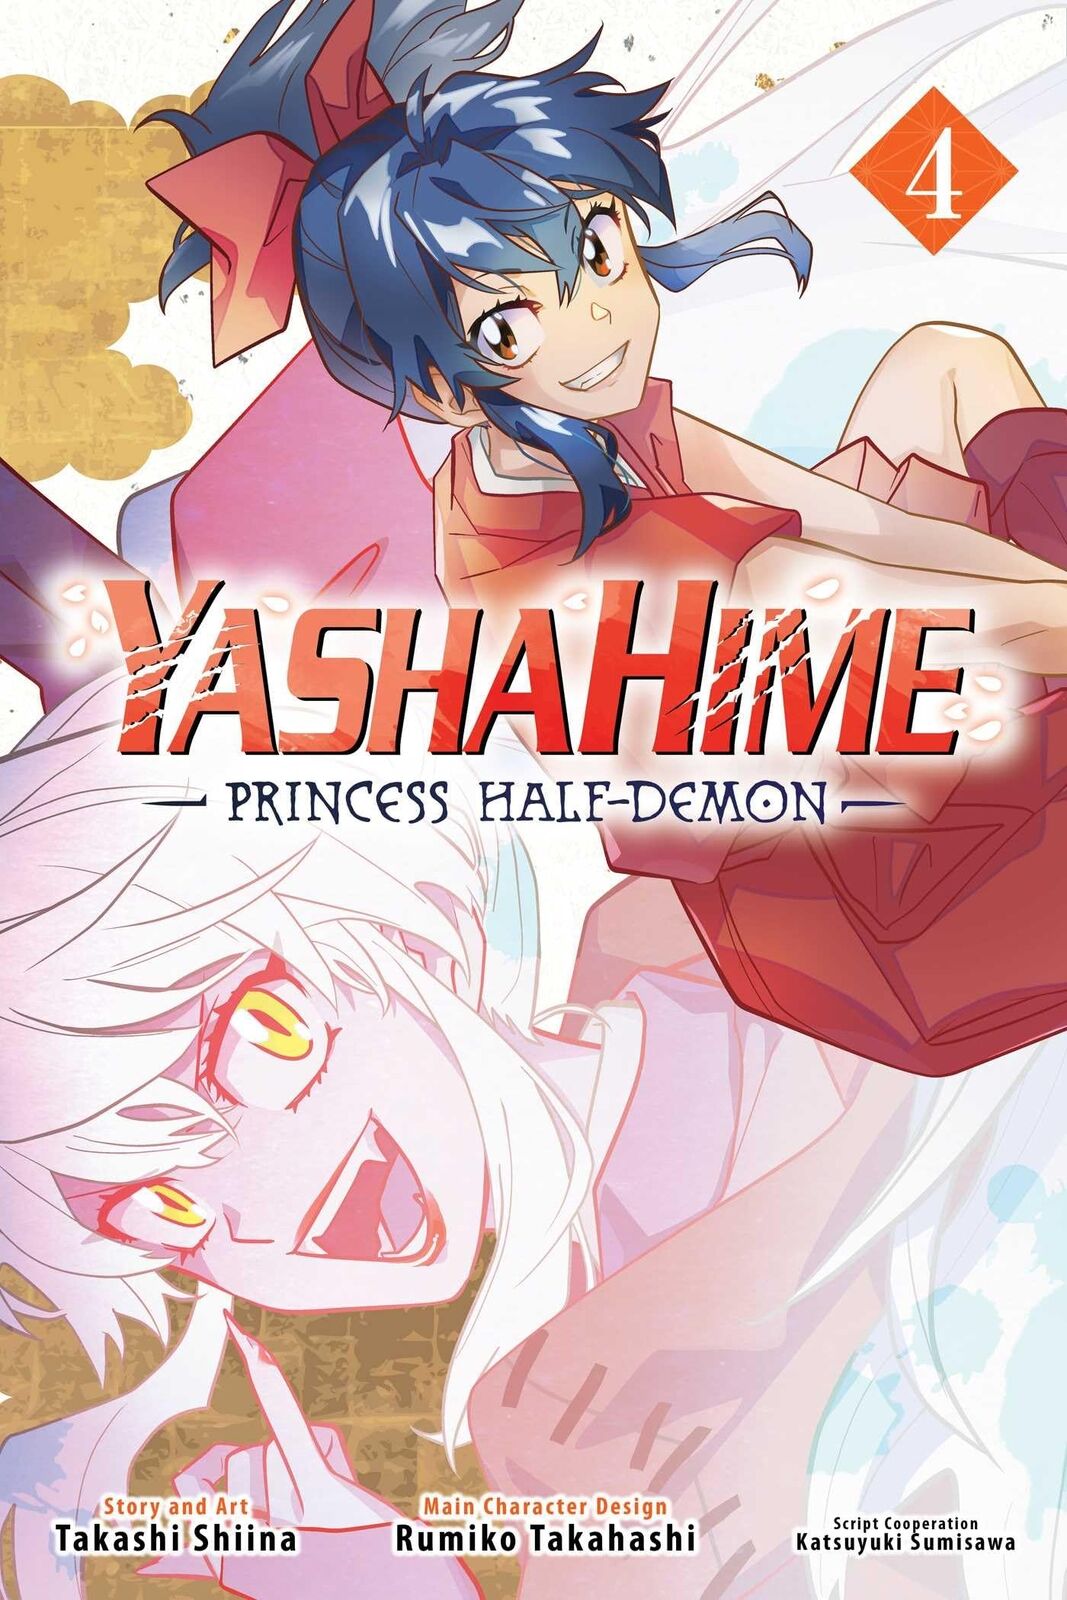 Yashahime: Princess Half-Demon, Vol. 4 (4)